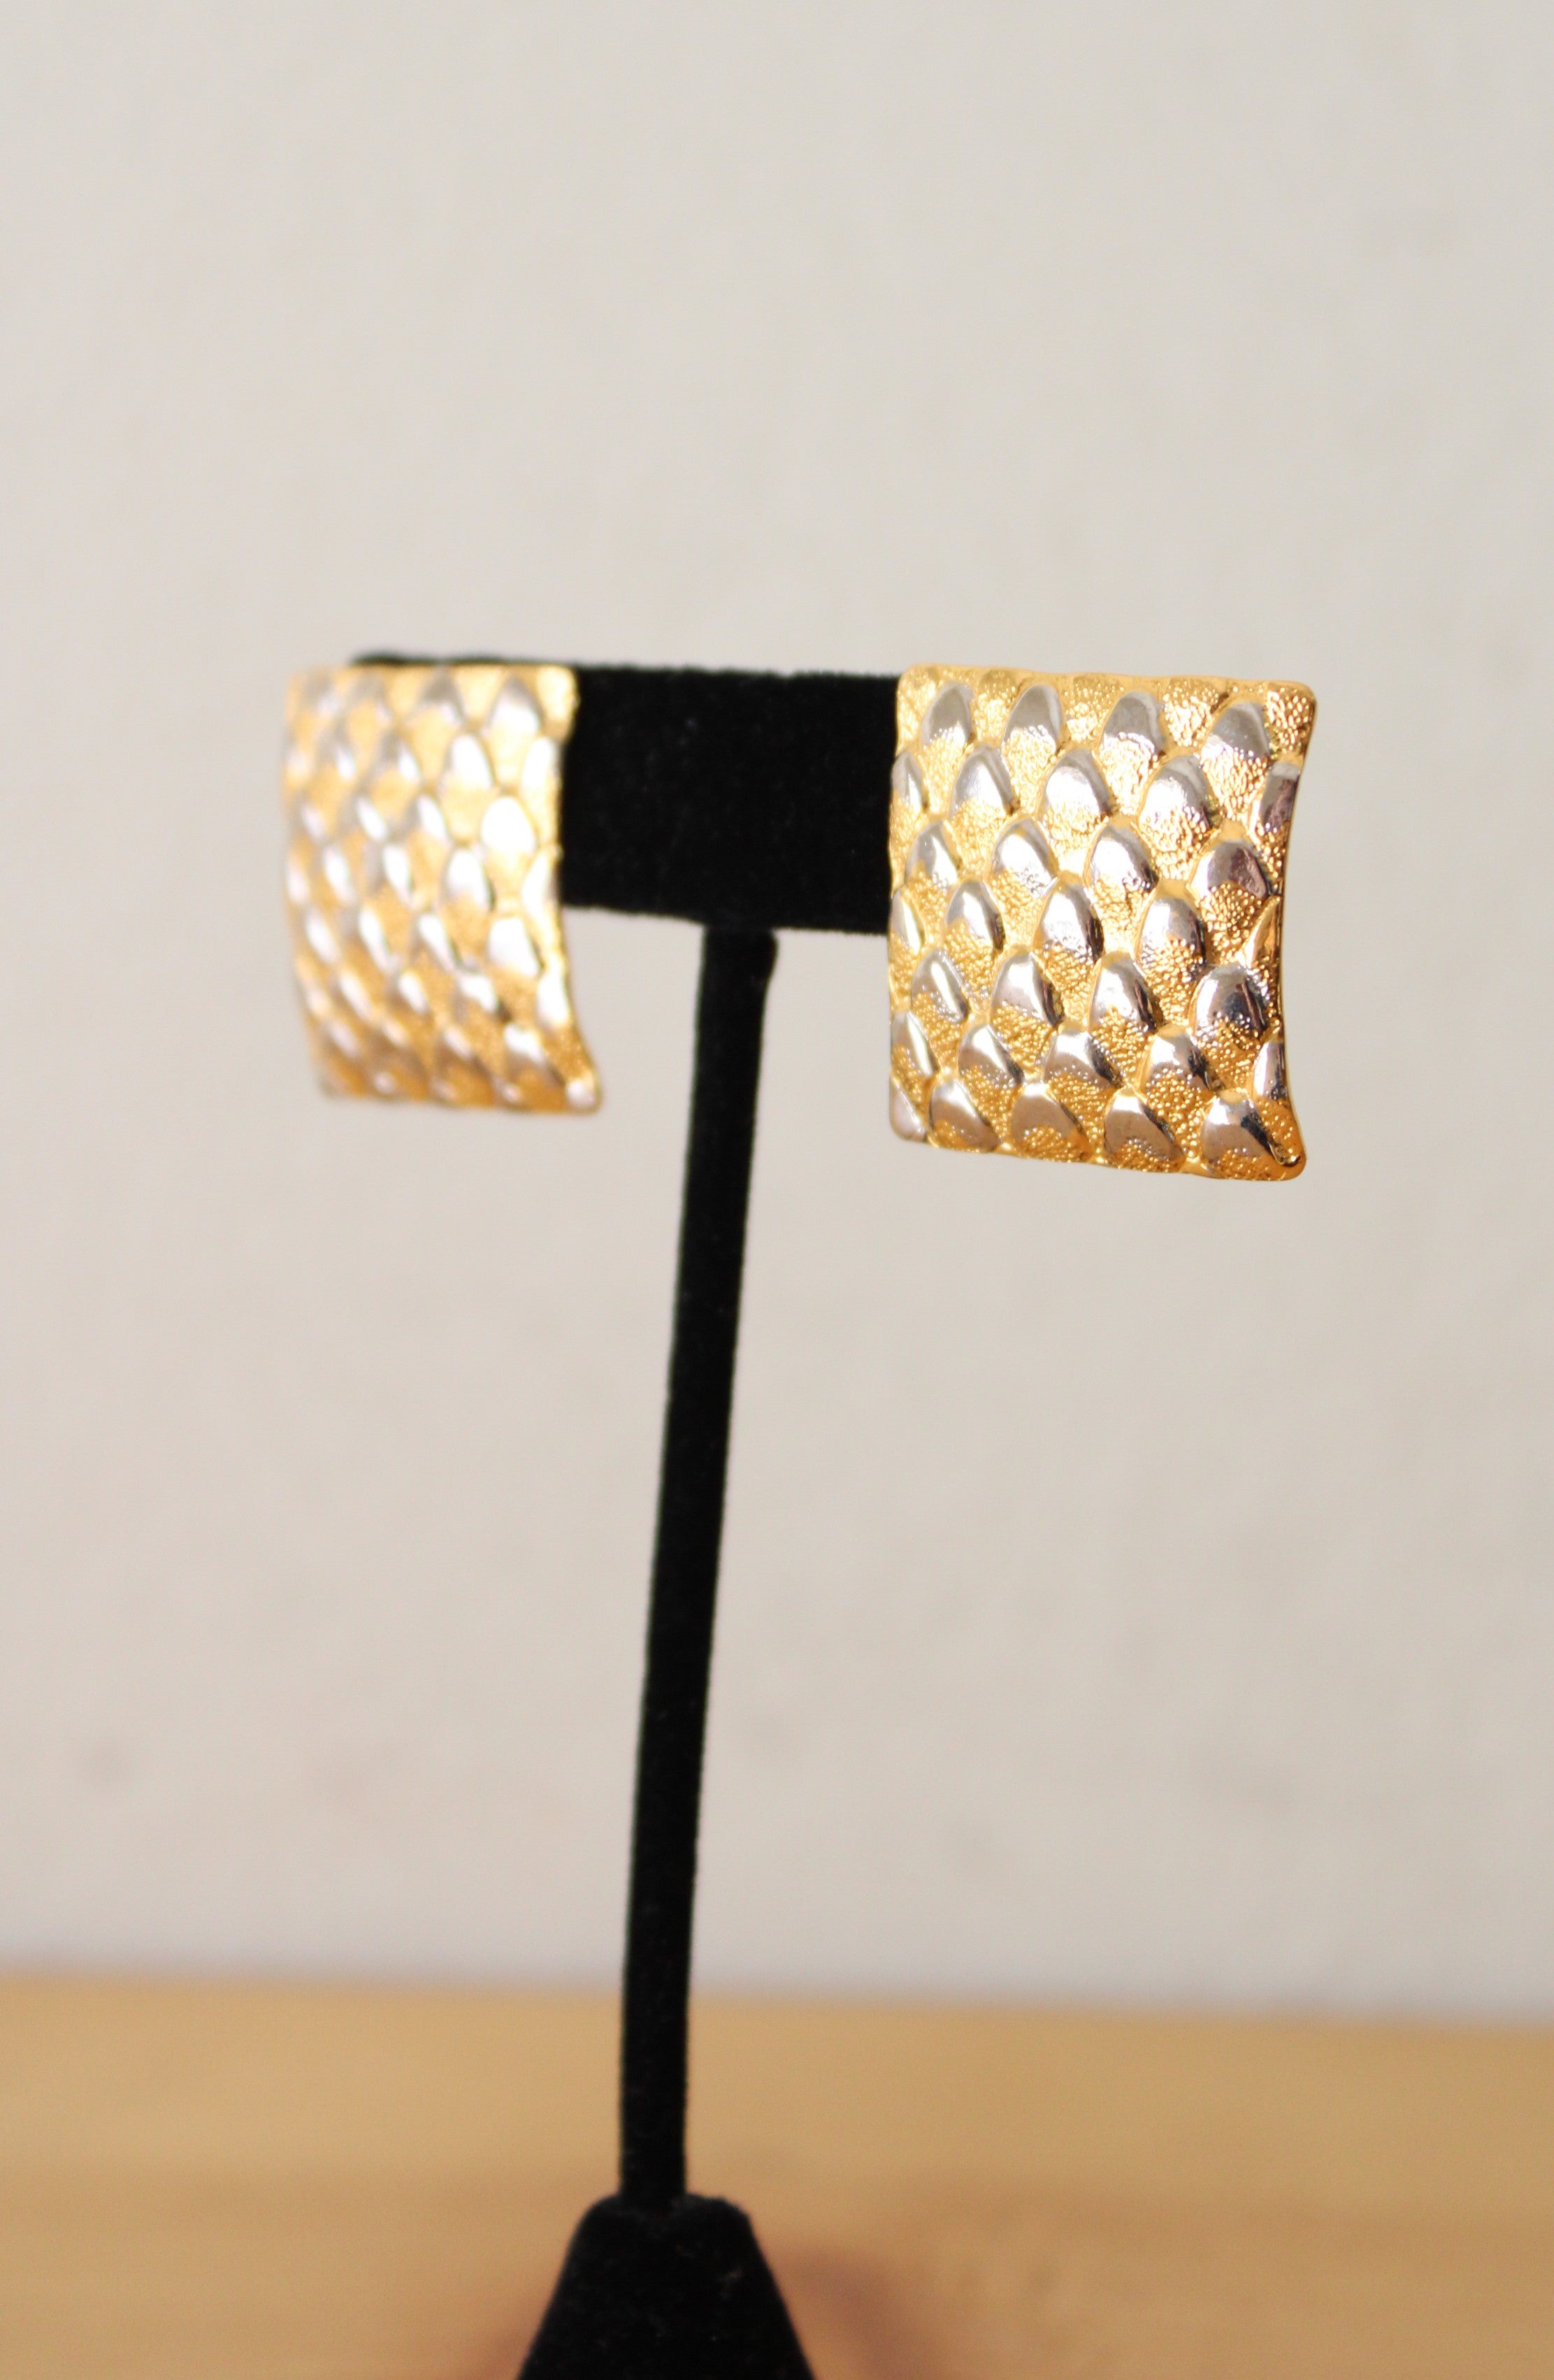 Vintage Gold Square Metal Scale Pattern Earrings